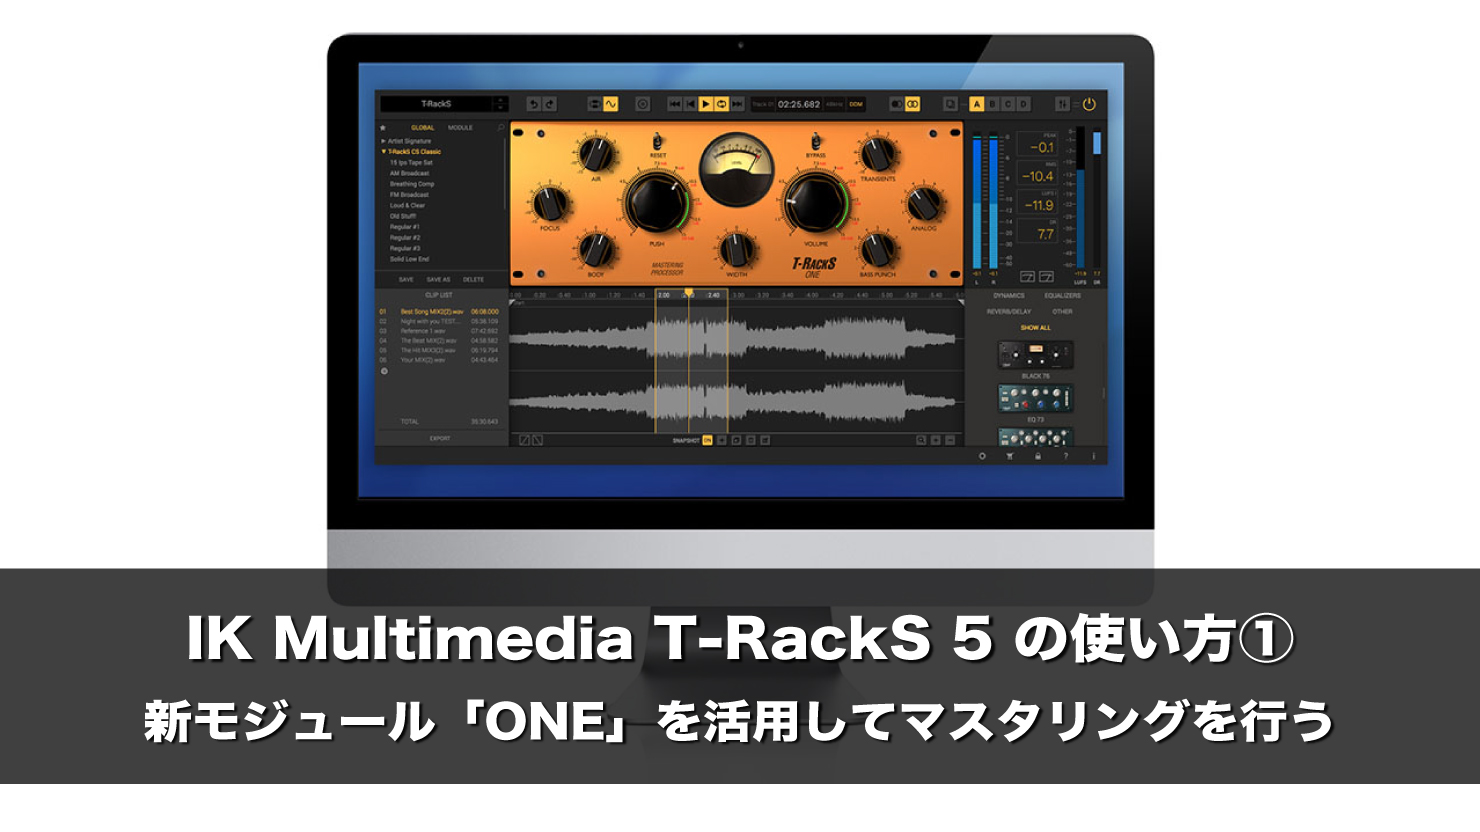 instal the new for apple IK Multimedia T-RackS 5 Complete 5.10.3